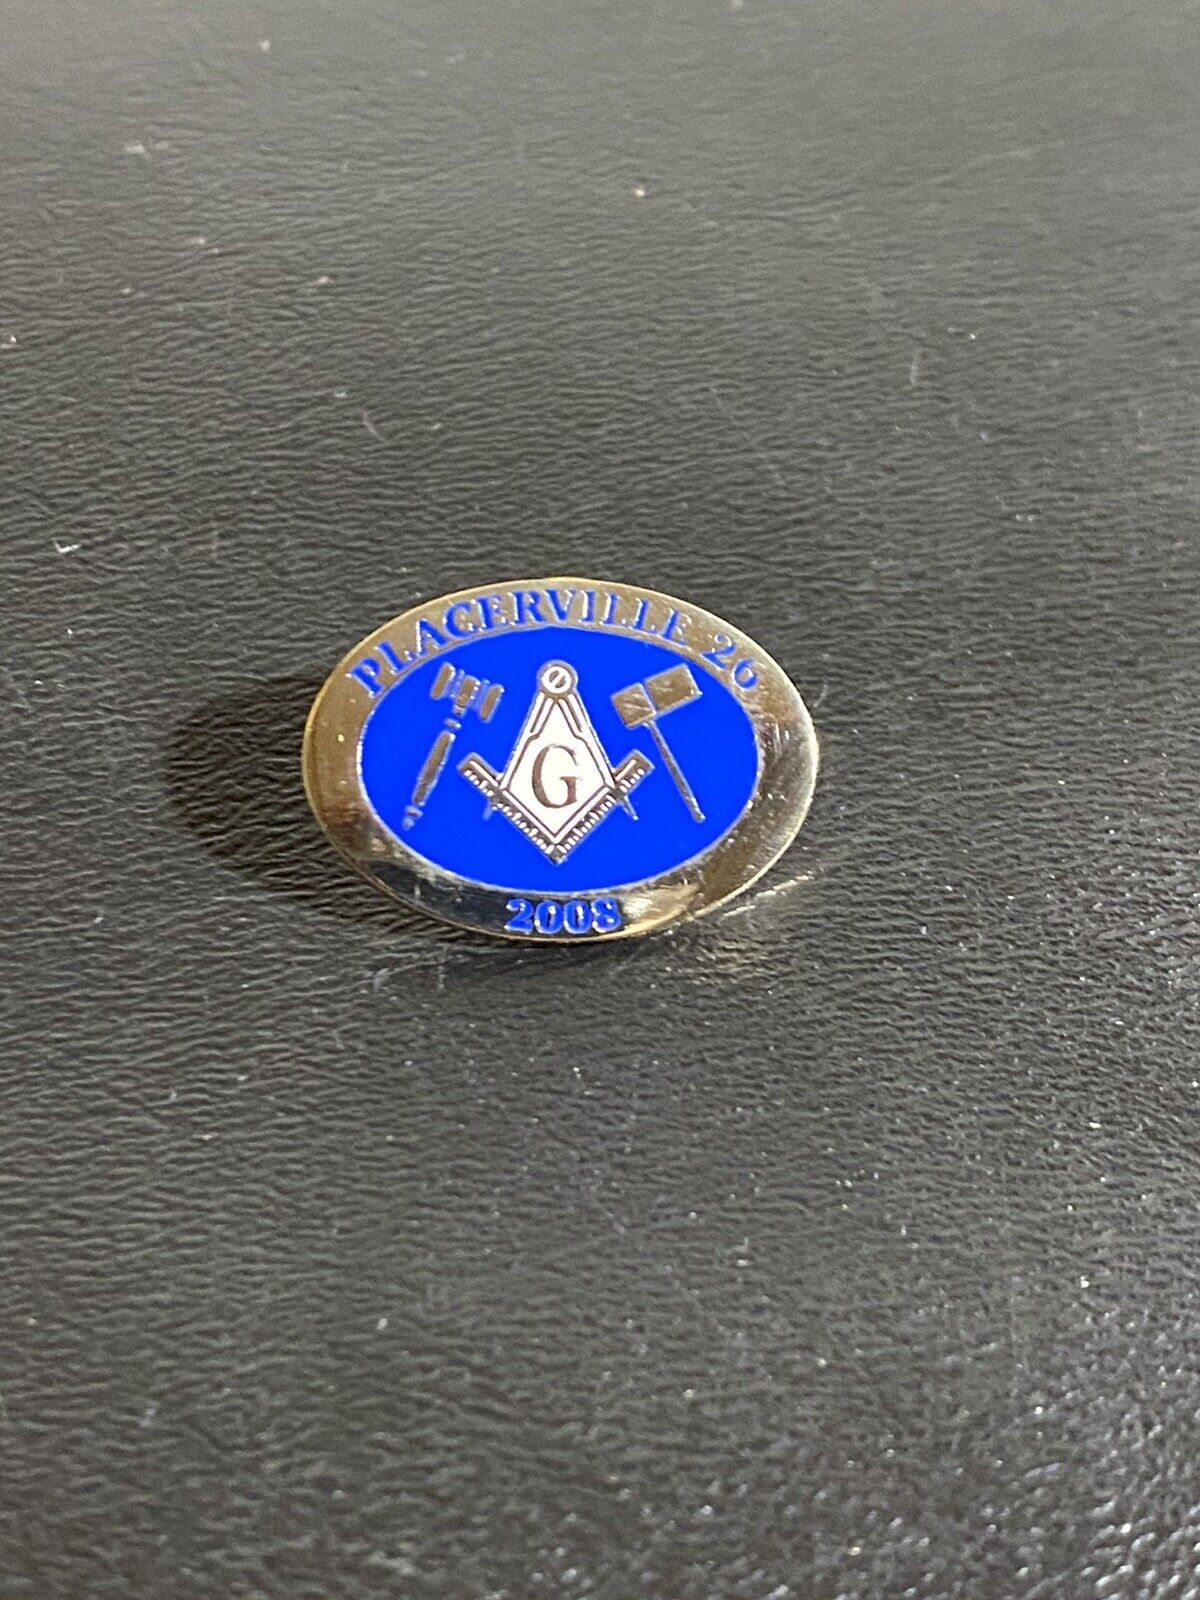 Free Mason Masonic Pin - Lodge 26 Placerville Hangtown California